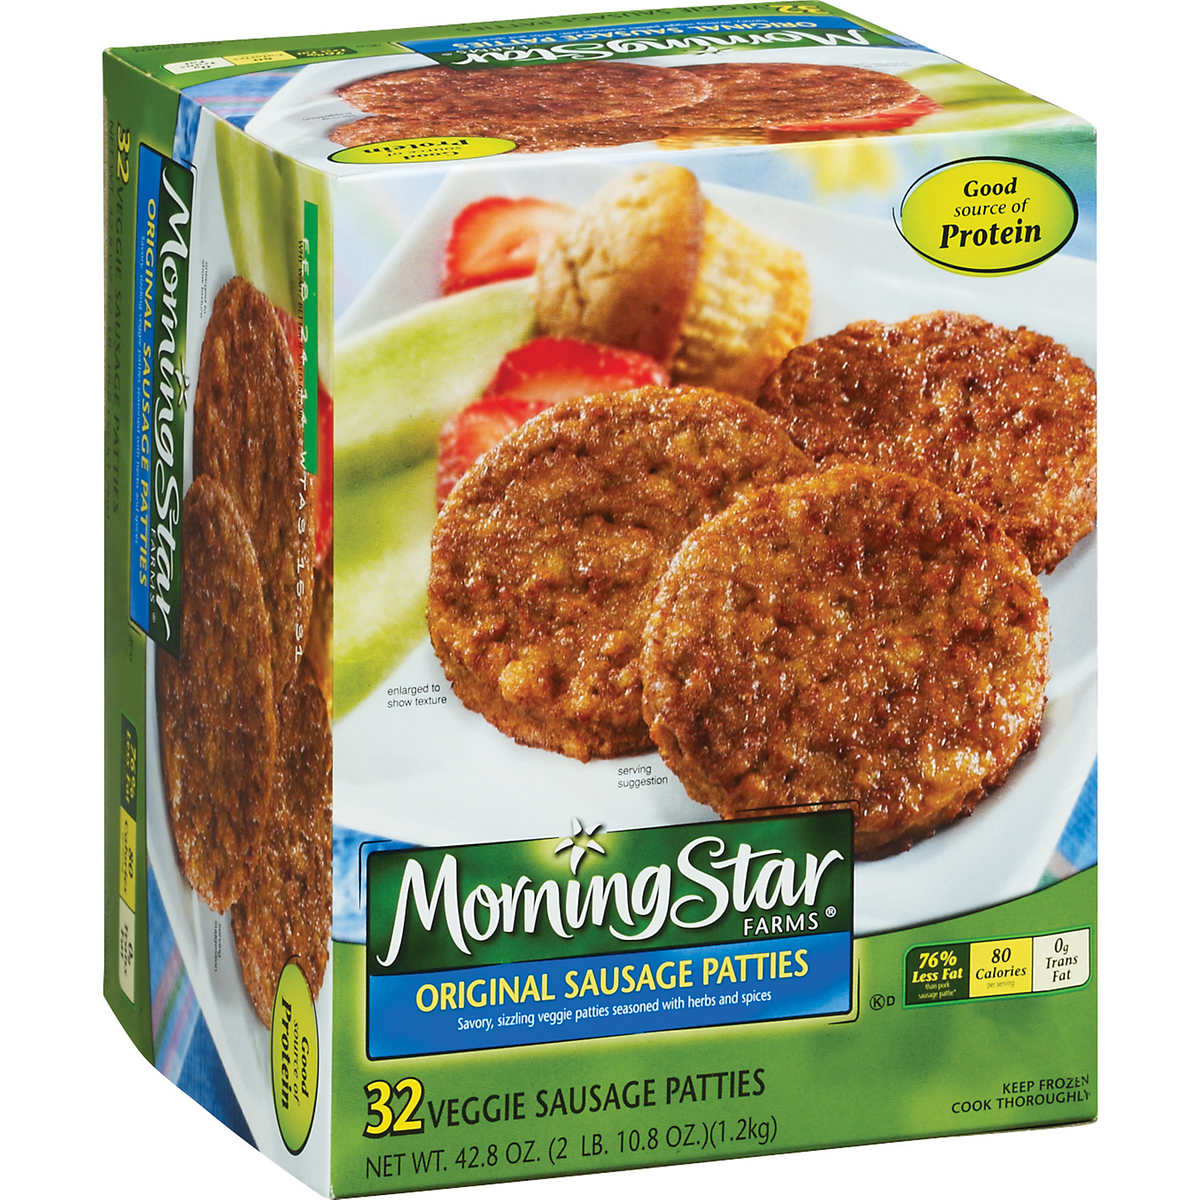 Morningstar Veggie Breakfast Sausage Patties 32 Ct